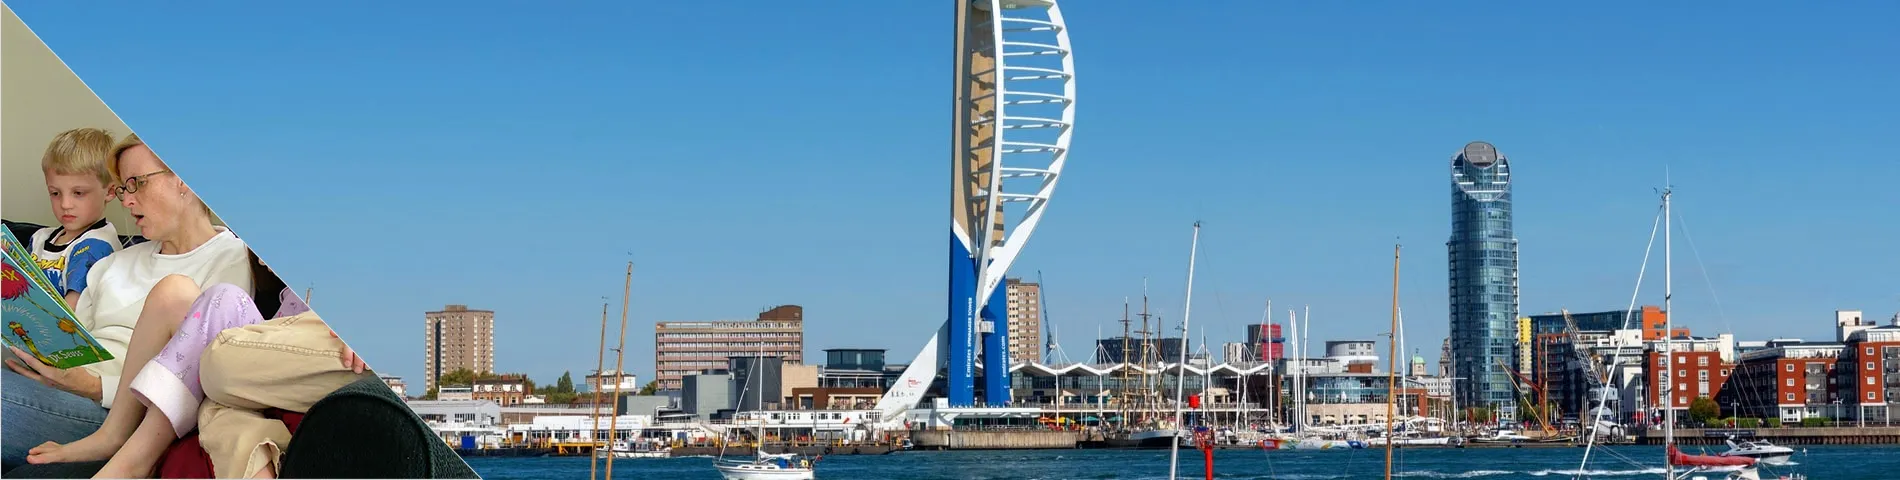 Portsmouth - Familiar